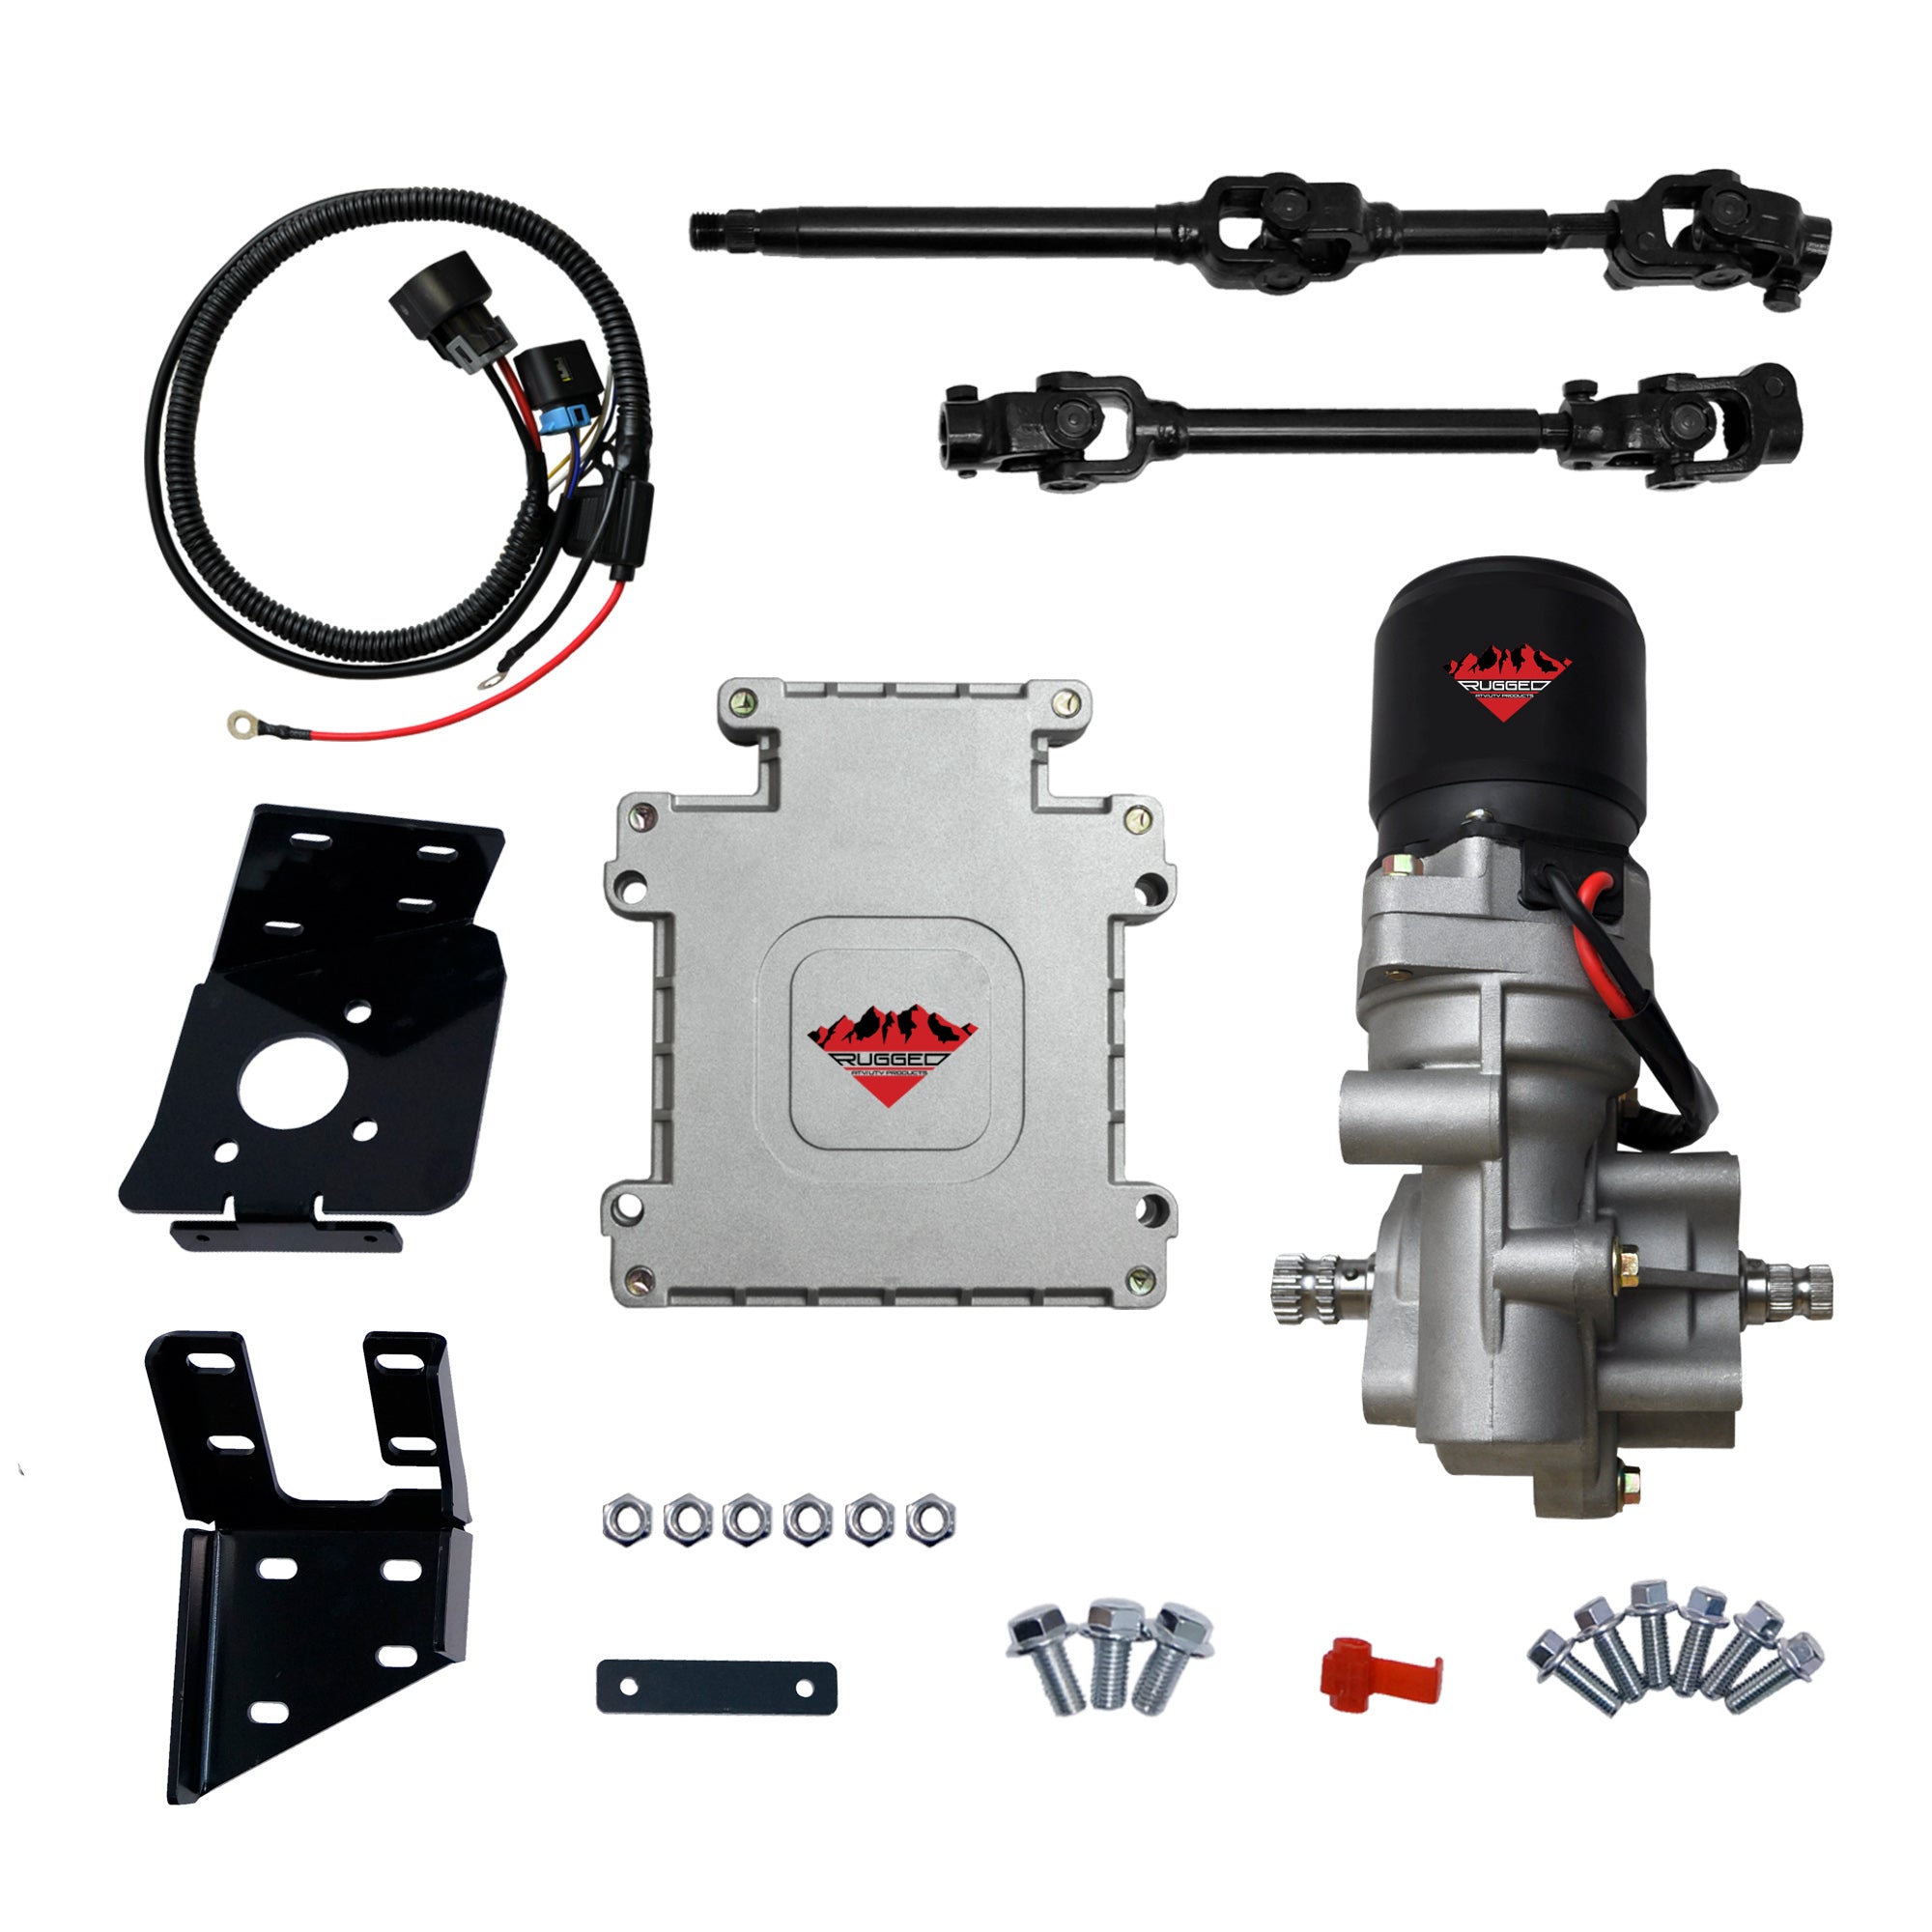 Electric Power Steering Kit for Polaris Sportsman 800 